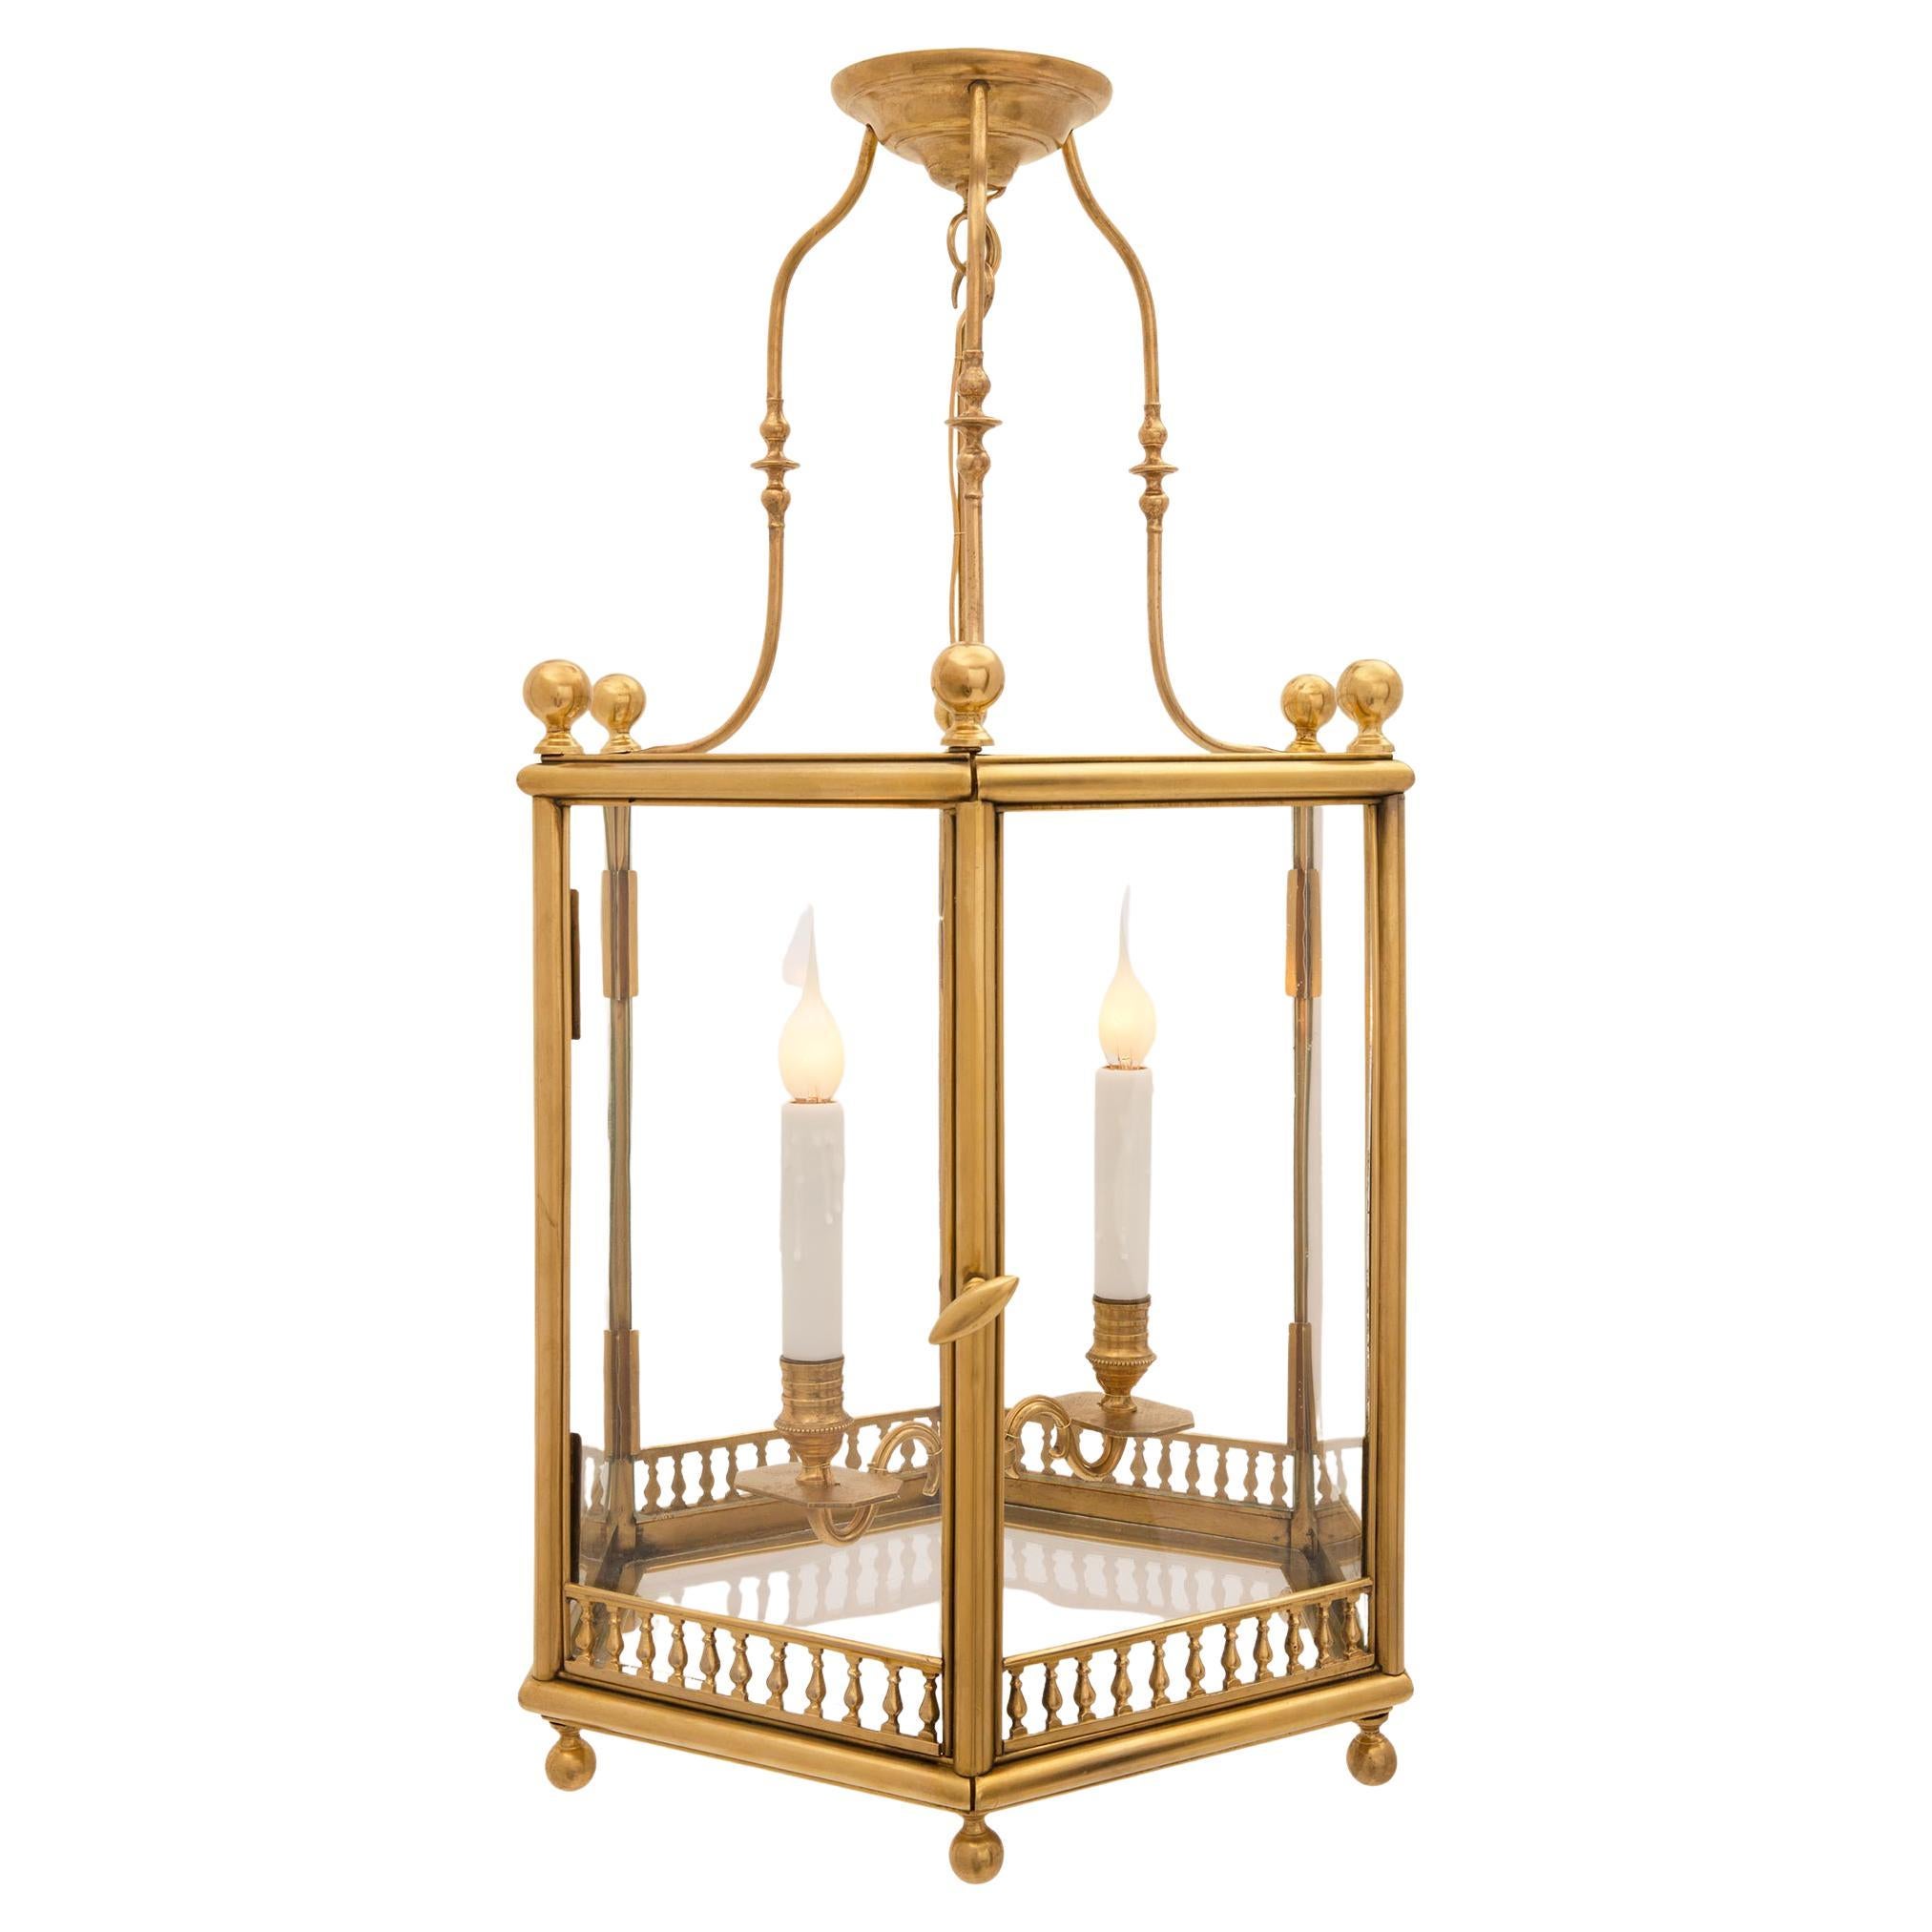 French 19th Century Louis XVI Style Ormolu and Glass Lantern